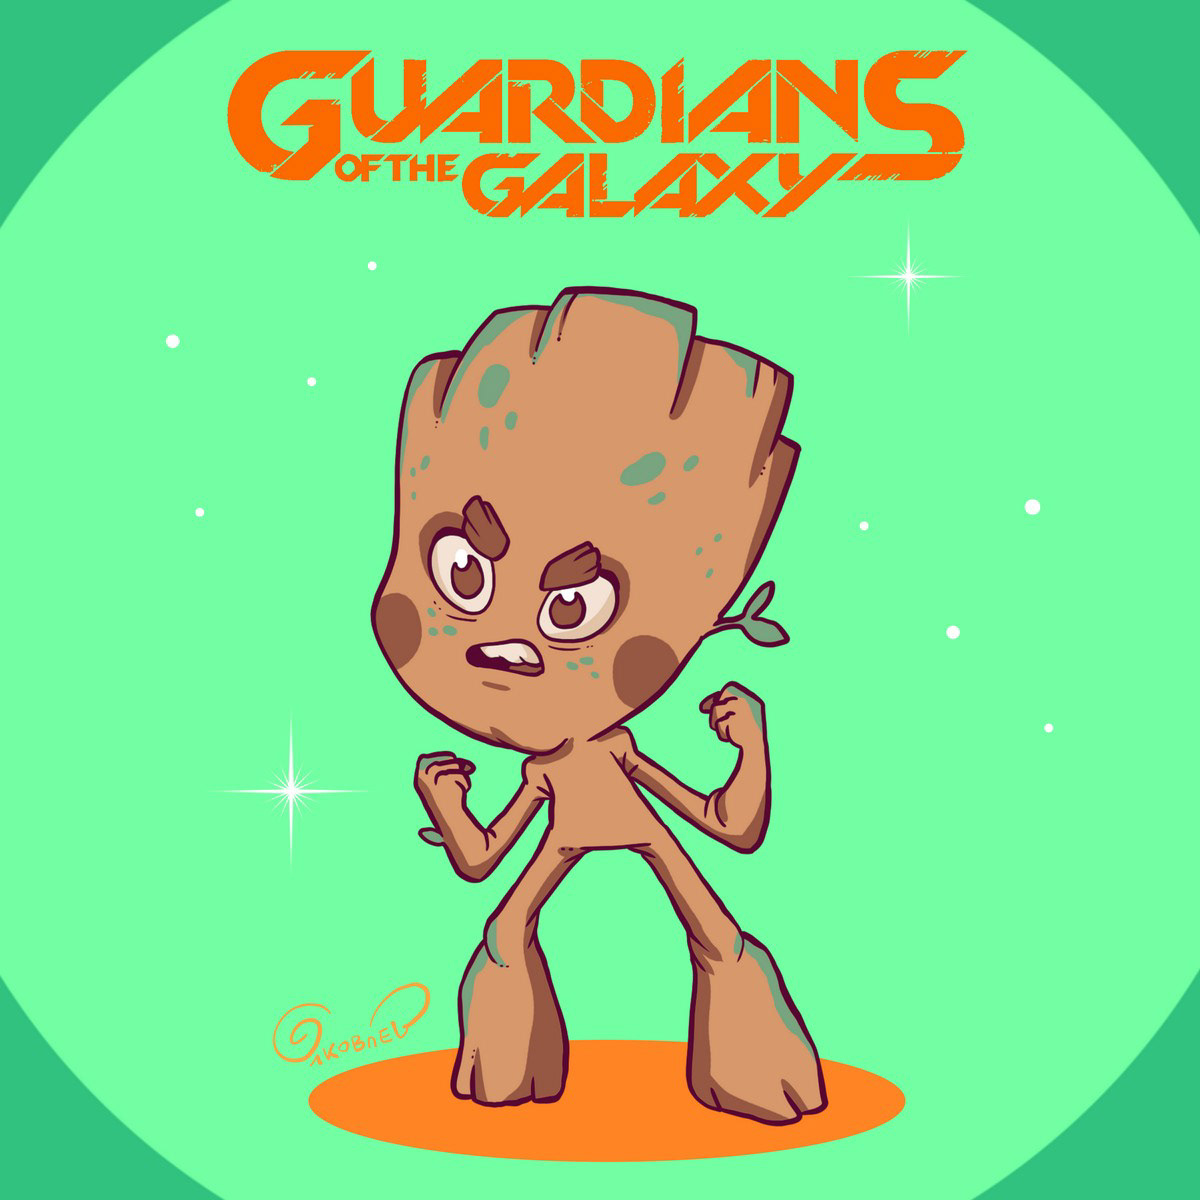 Drax gamora groot GuardiansOFtheGALAXY mantis marvel rocket starlord